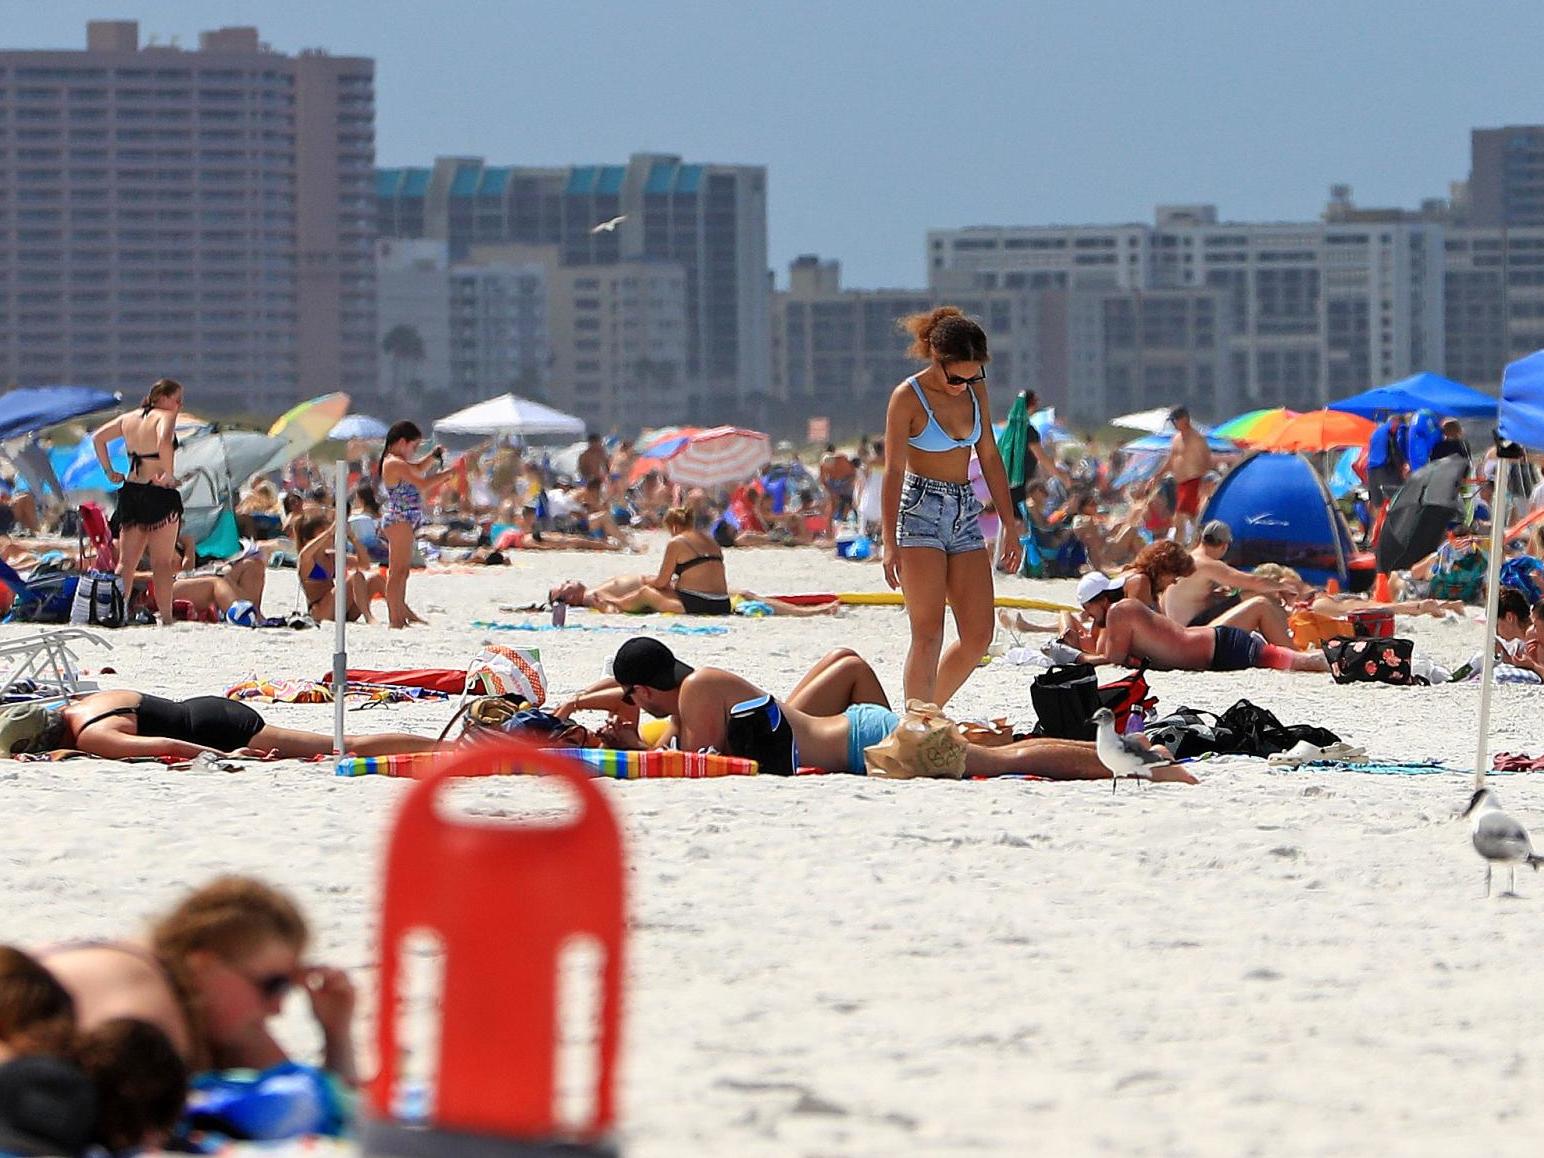 Coronavirus: Hundreds flock to Florida beaches despite Covid-19 cases rising to nearly 5,000